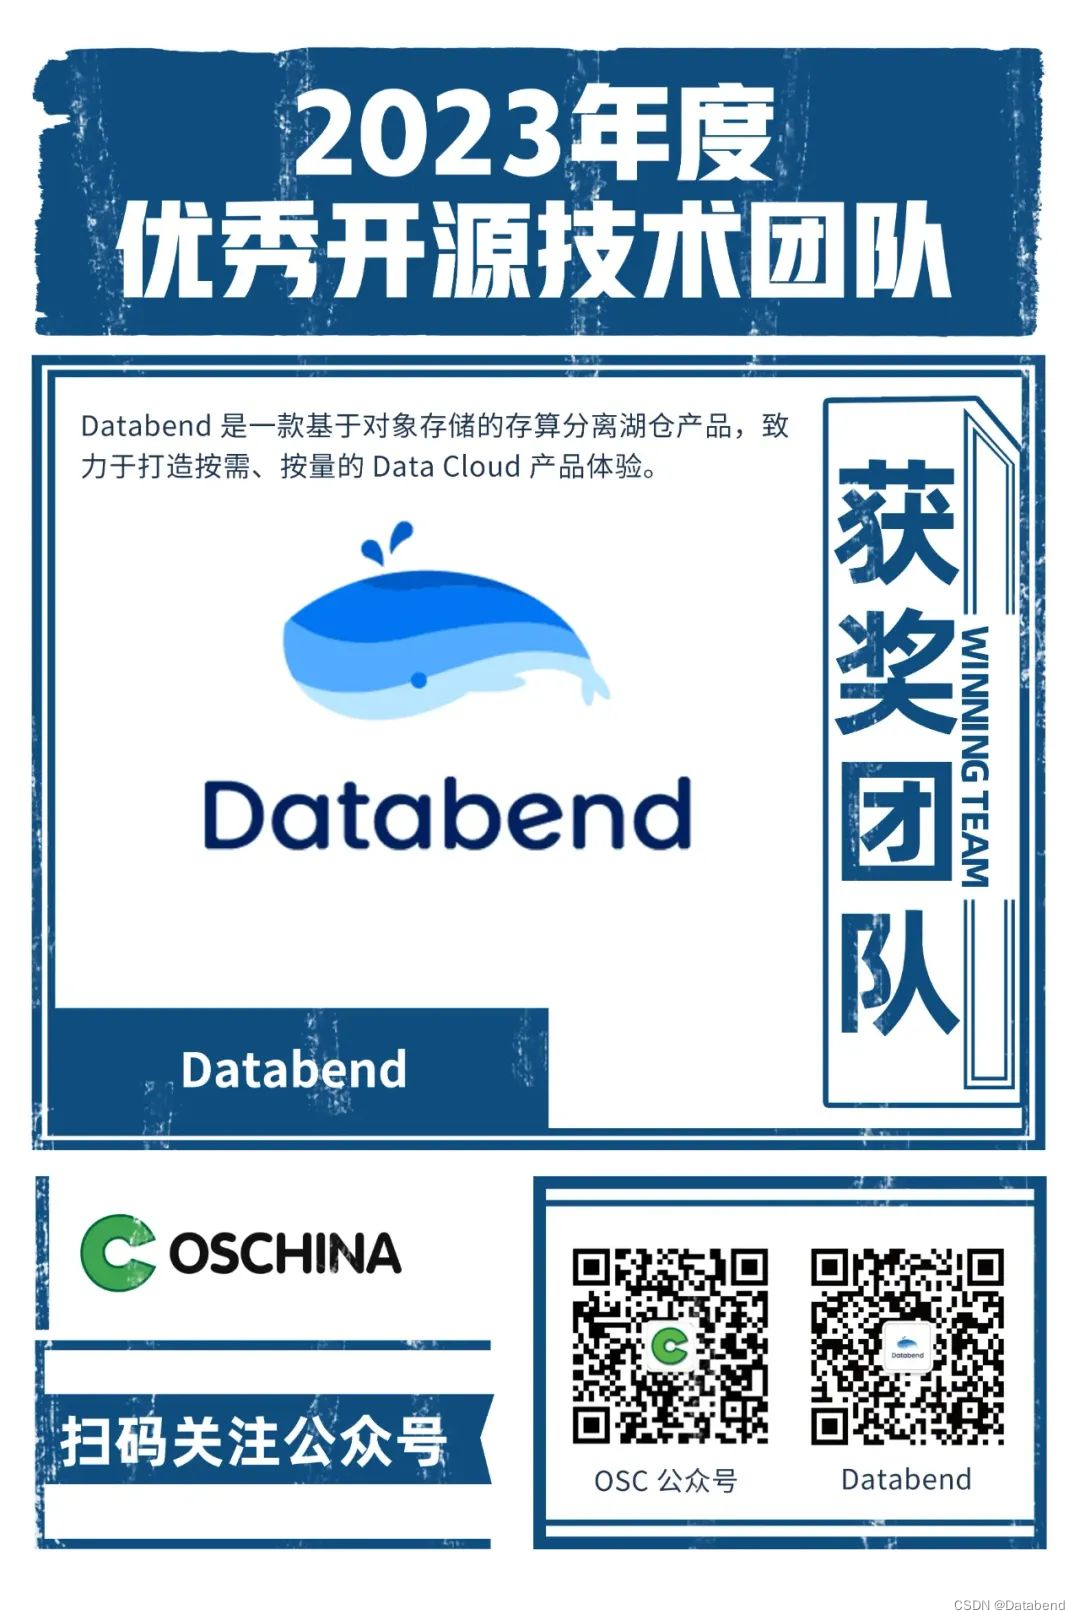 Databend 开源社区上榜 2023 年度 OSCHINA 优秀开源技术团队